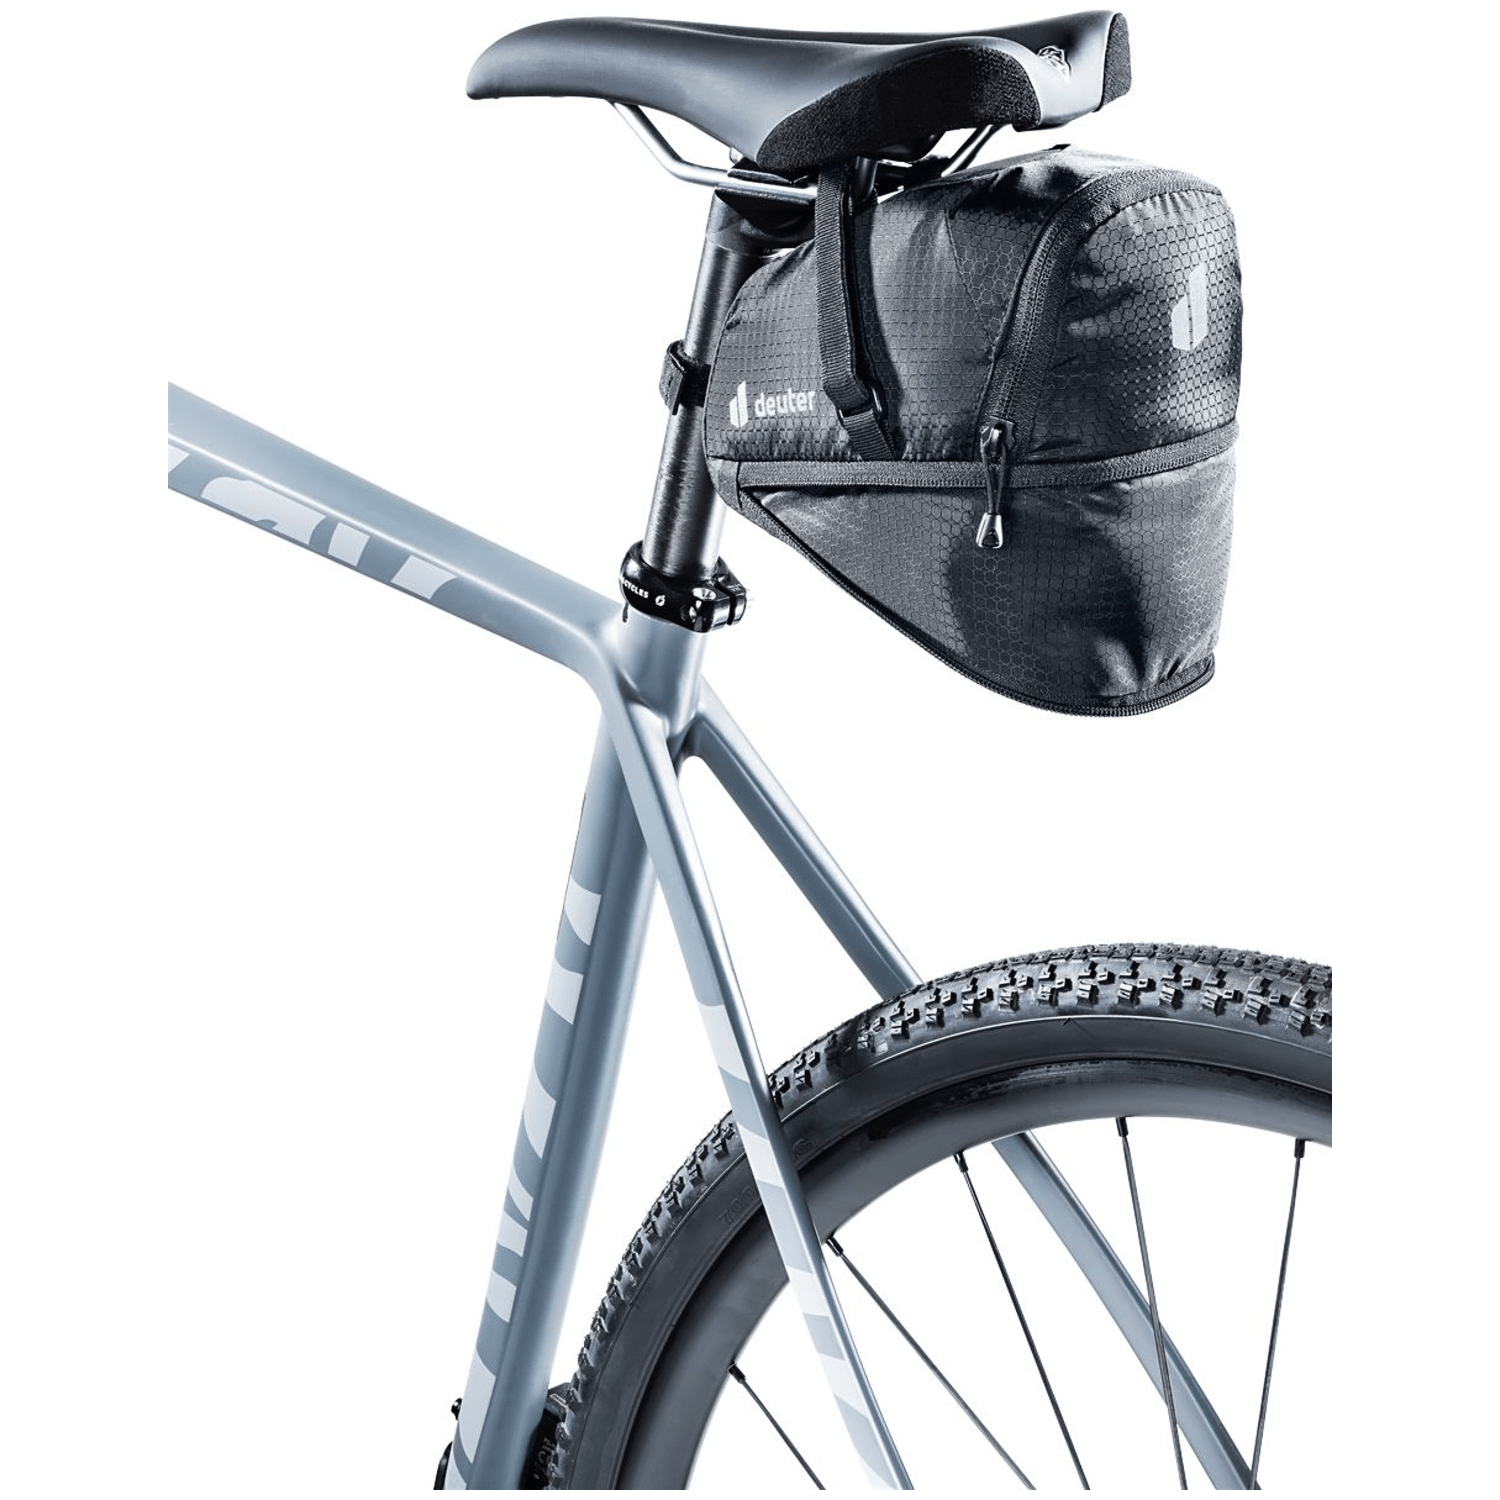 Deuter Bike Bag 1.1+0.3 Fahrradtasche